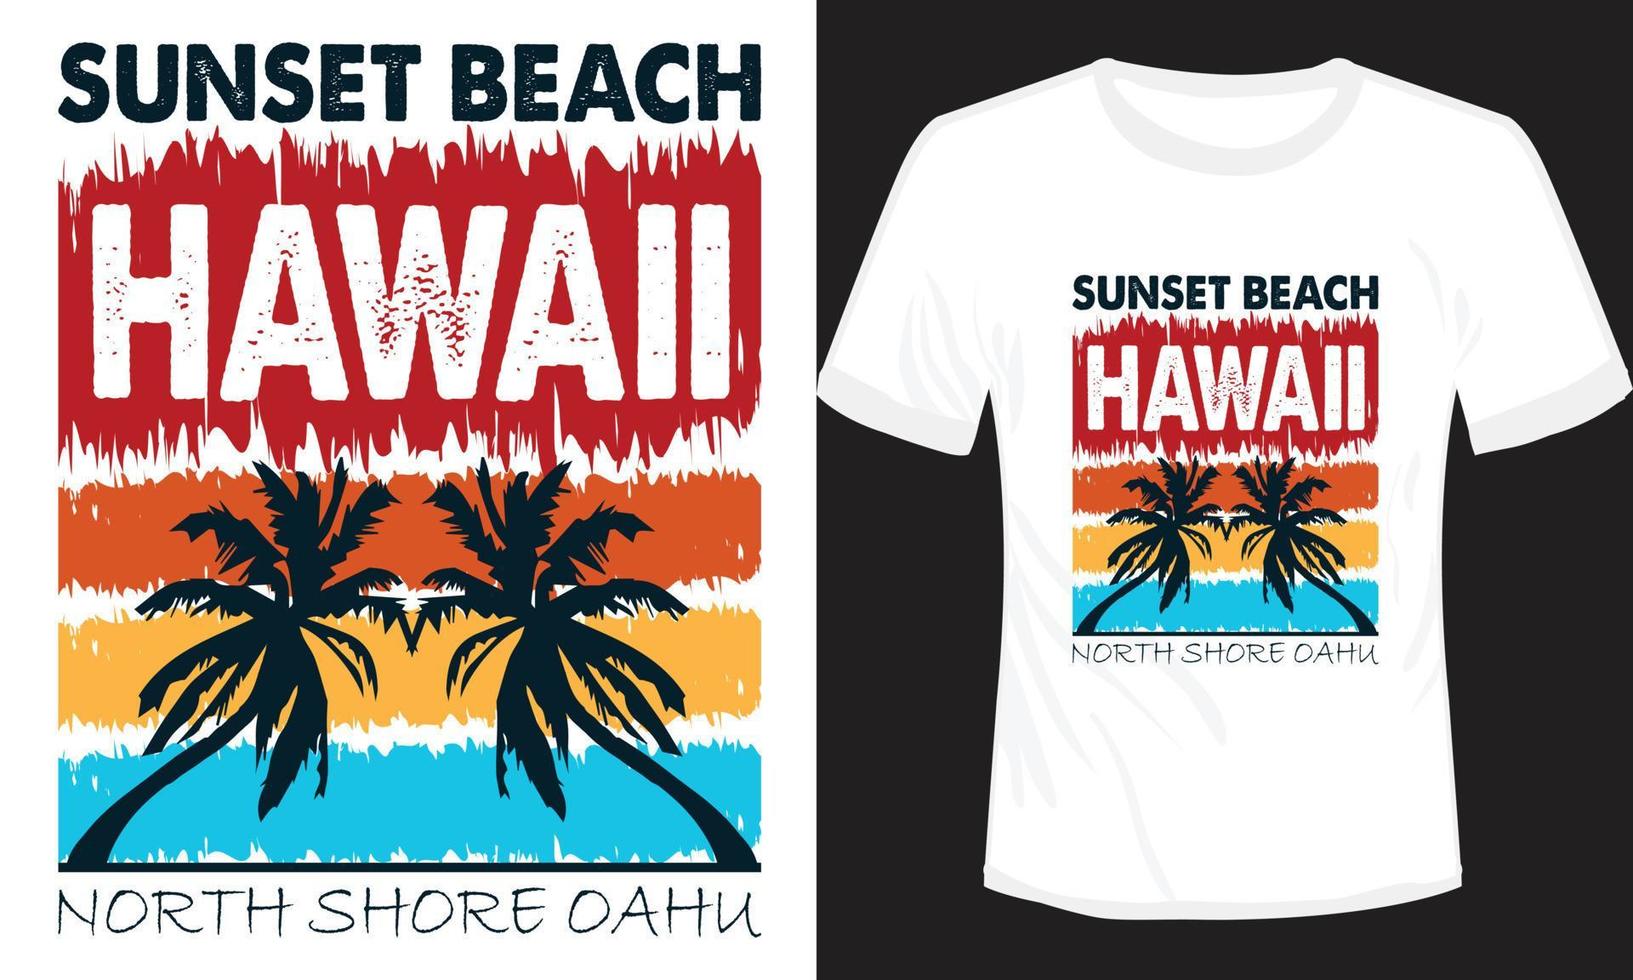 sunset beach Hawaii t-shirt design print-ready, vector illustration of sunset beach